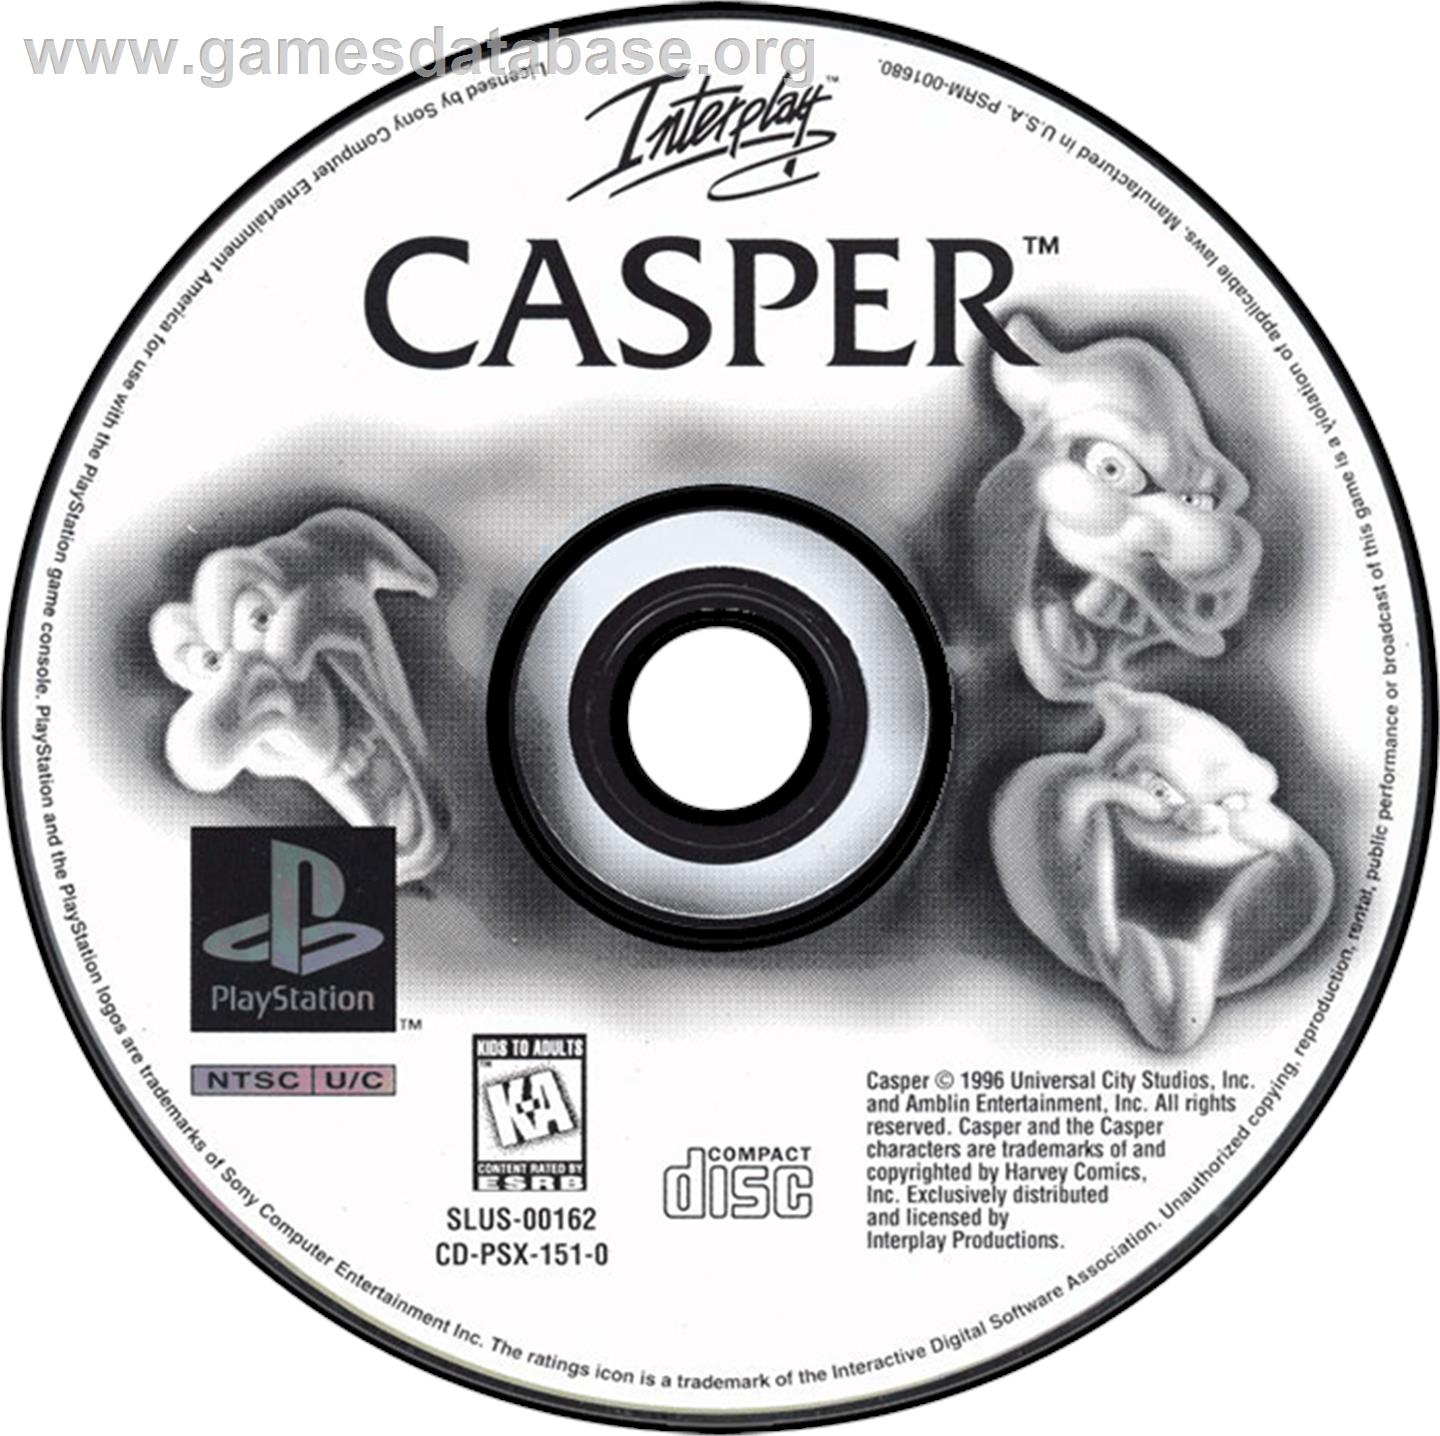 Casper: Friends Around the World - Sony Playstation - Artwork - Disc